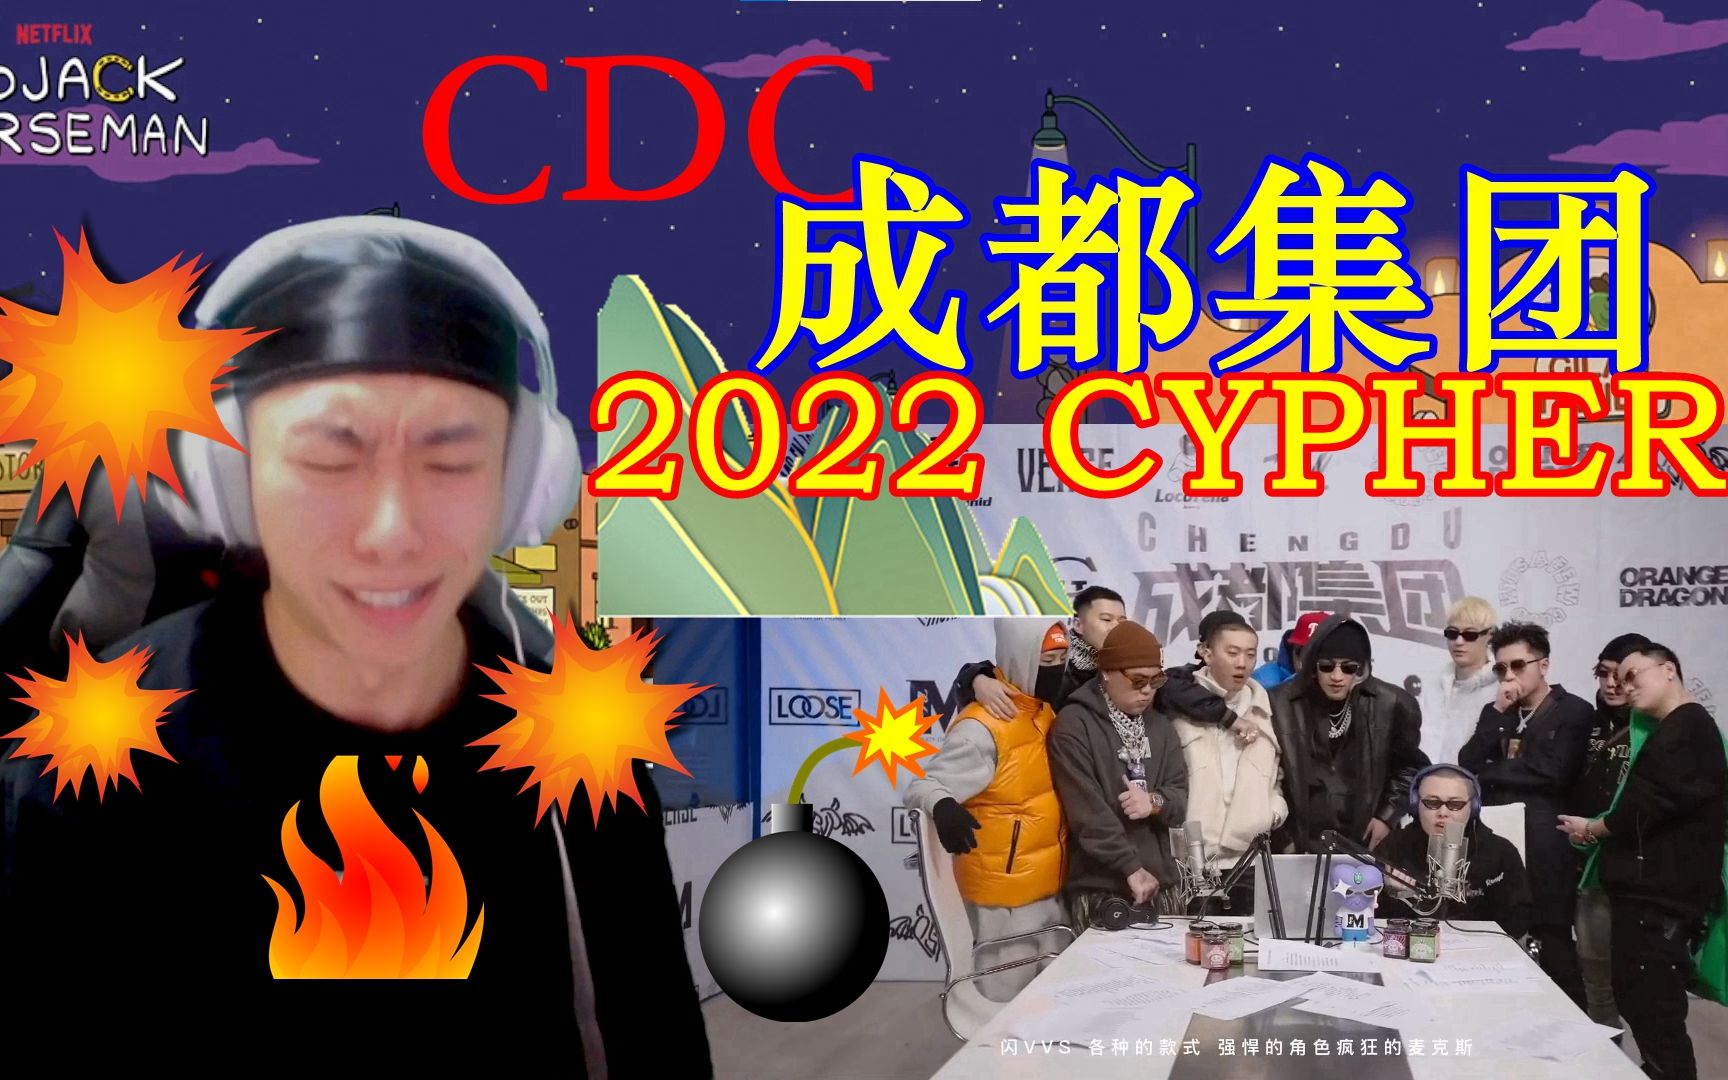 CDC 成都集团2022 CYPHER reaction 谢老板来了真勾8猛，全精兵悍将 中文说唱绕不过的大山！！！